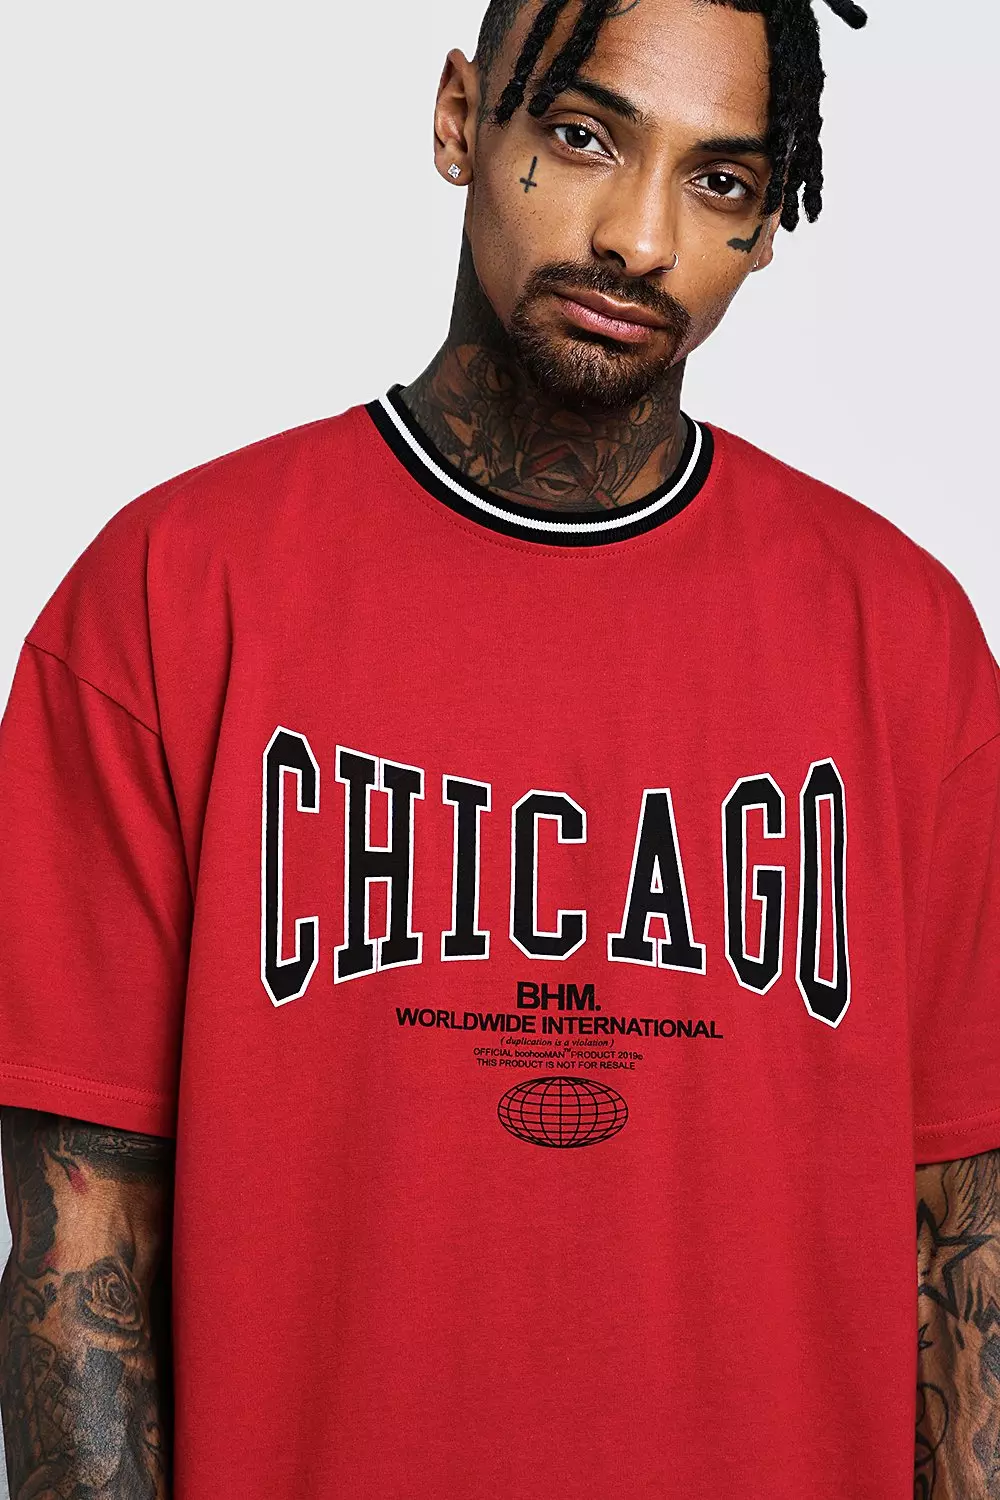 Oversized Chicago Print T-Shirt